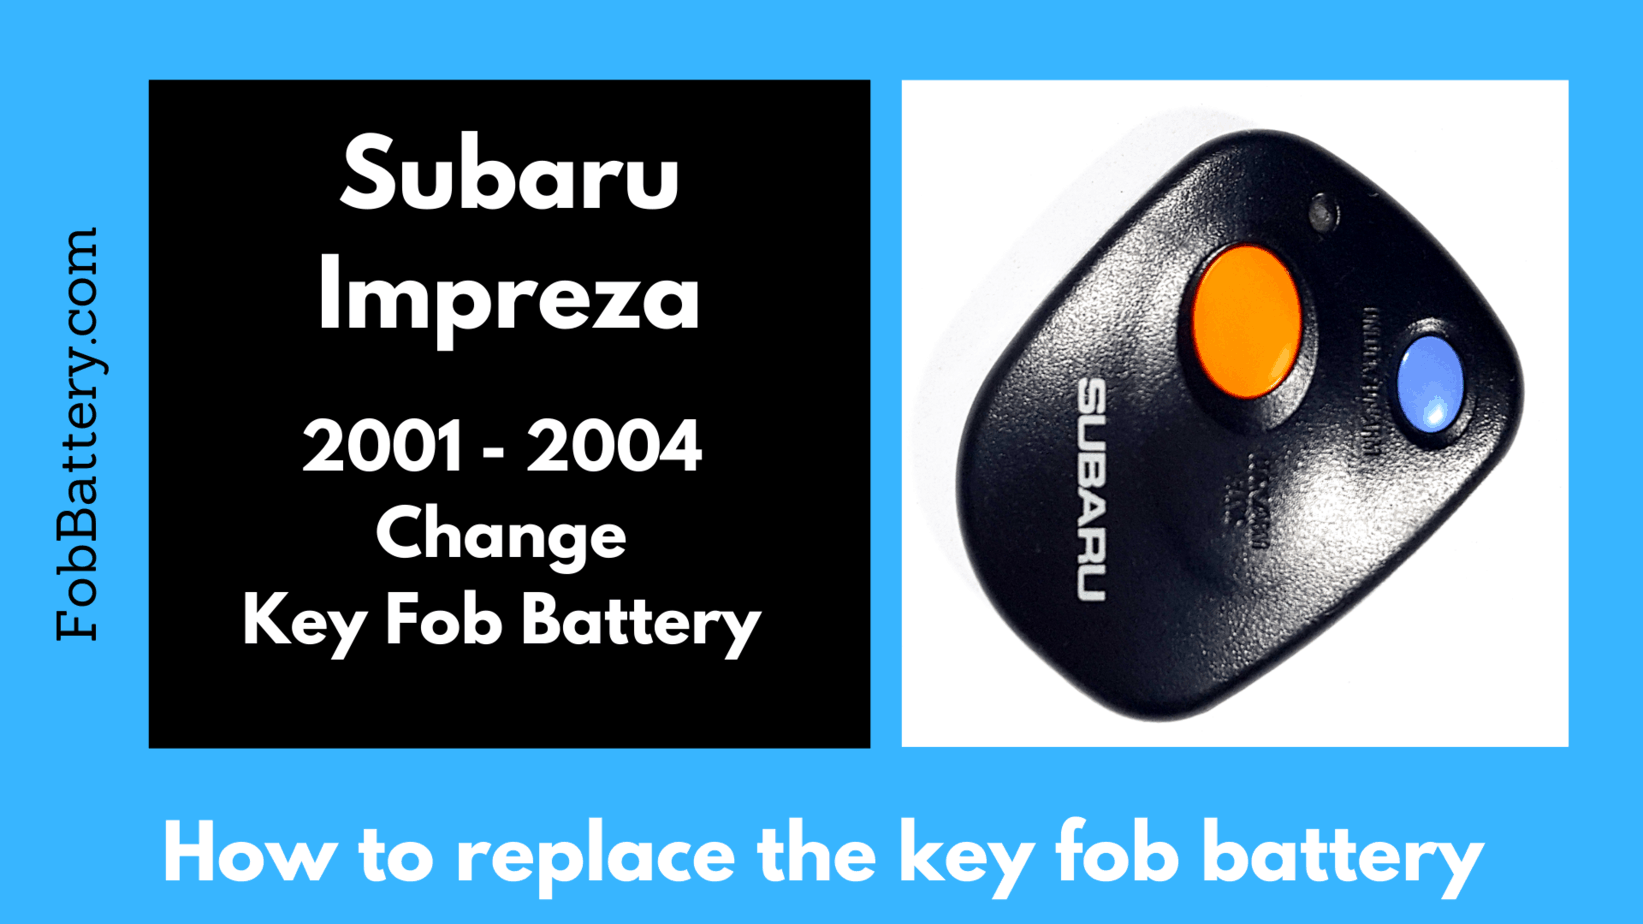 Subaru Impreza key fob battery replacement